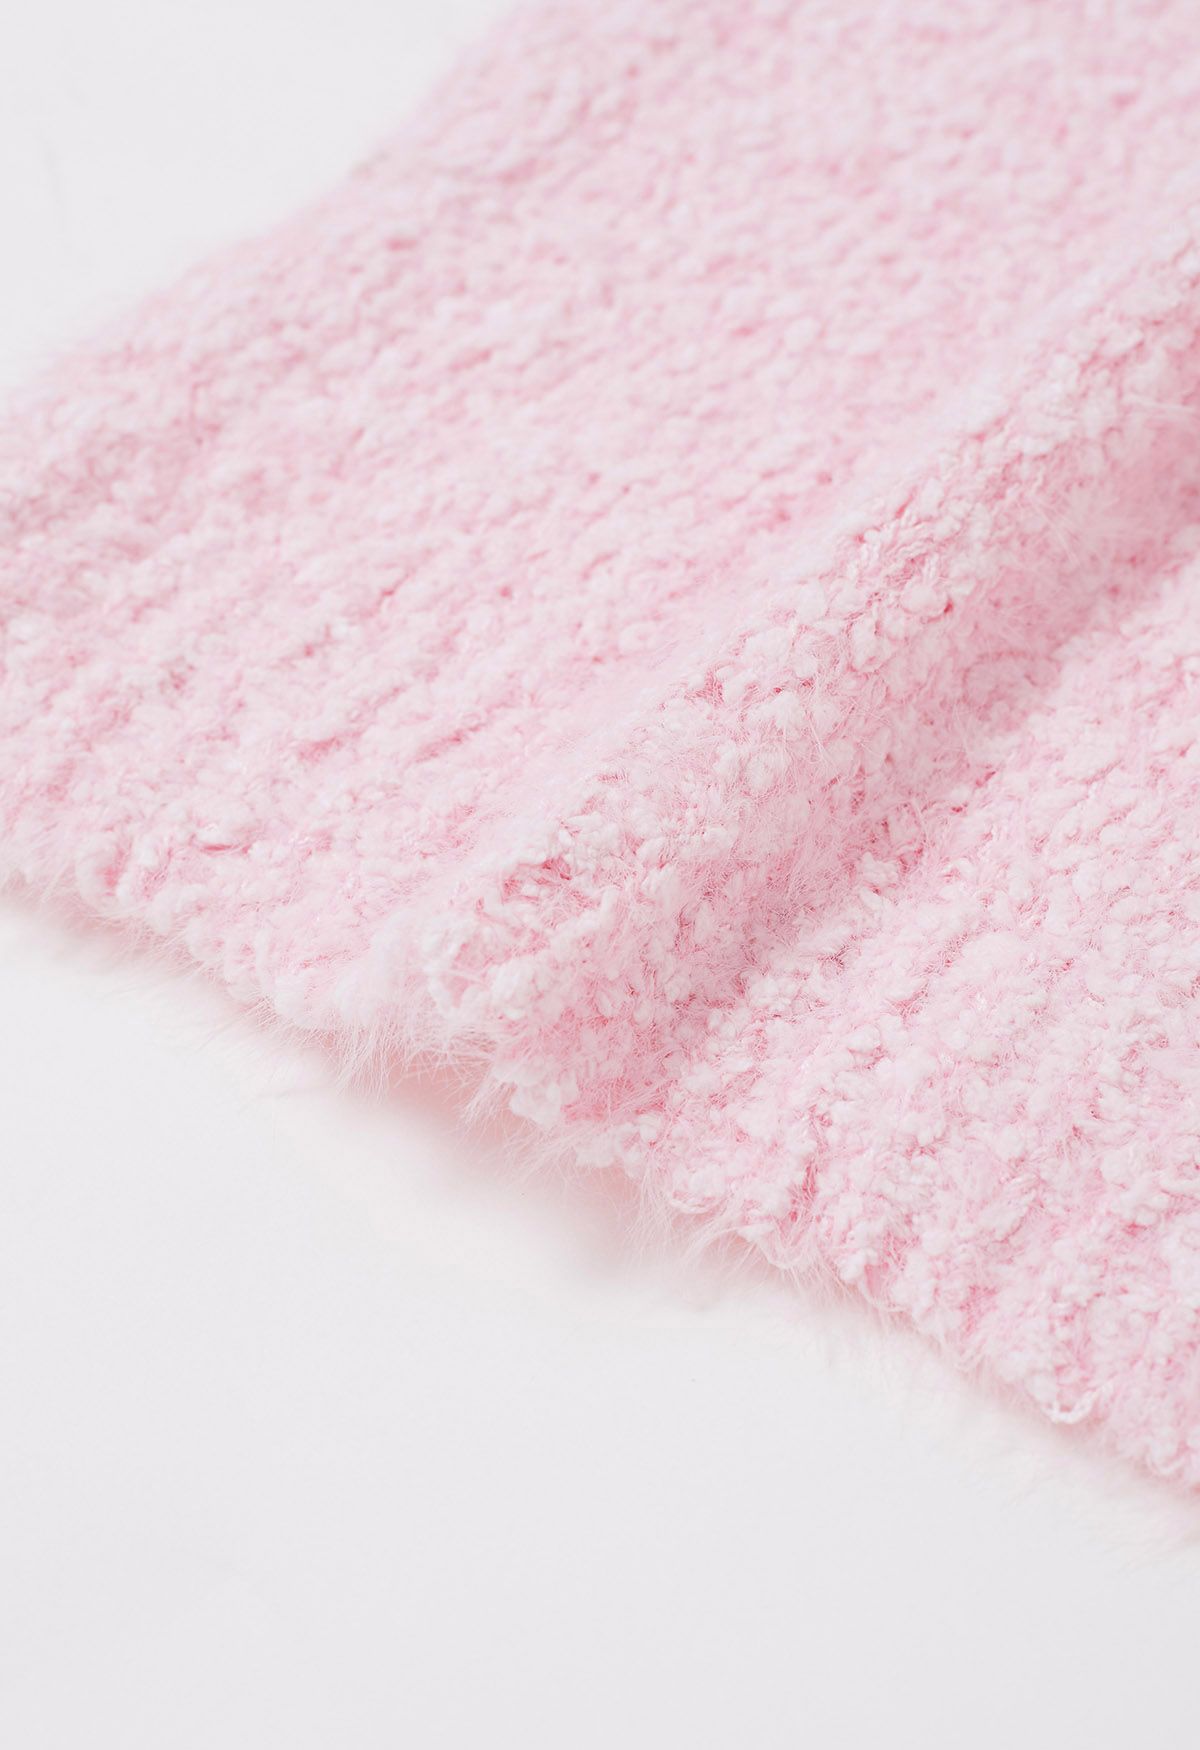 Softness V-Neck Knit Vest in Pink